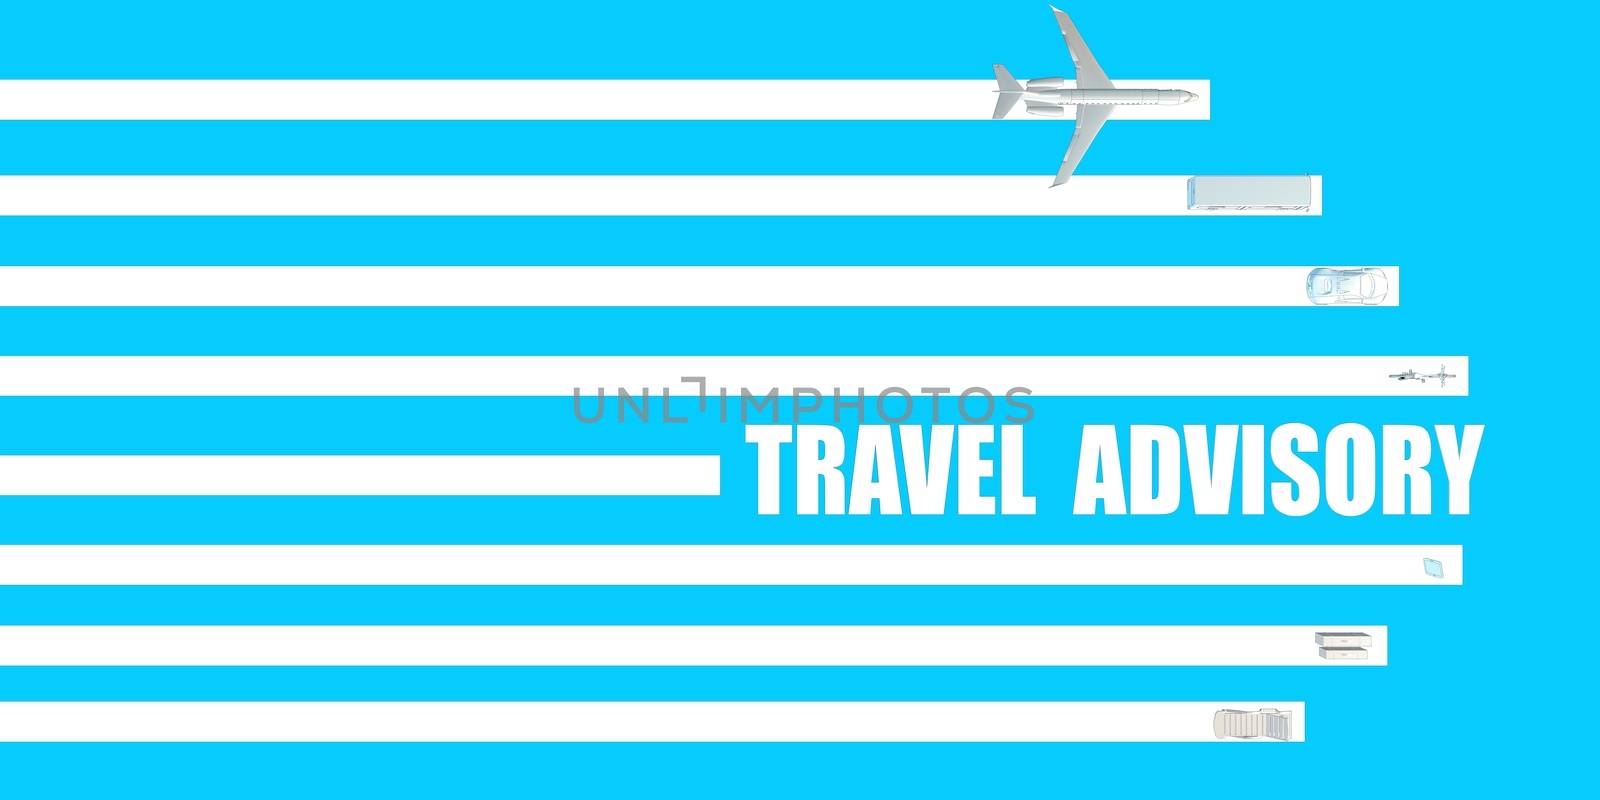 Travel Advisory by kentoh